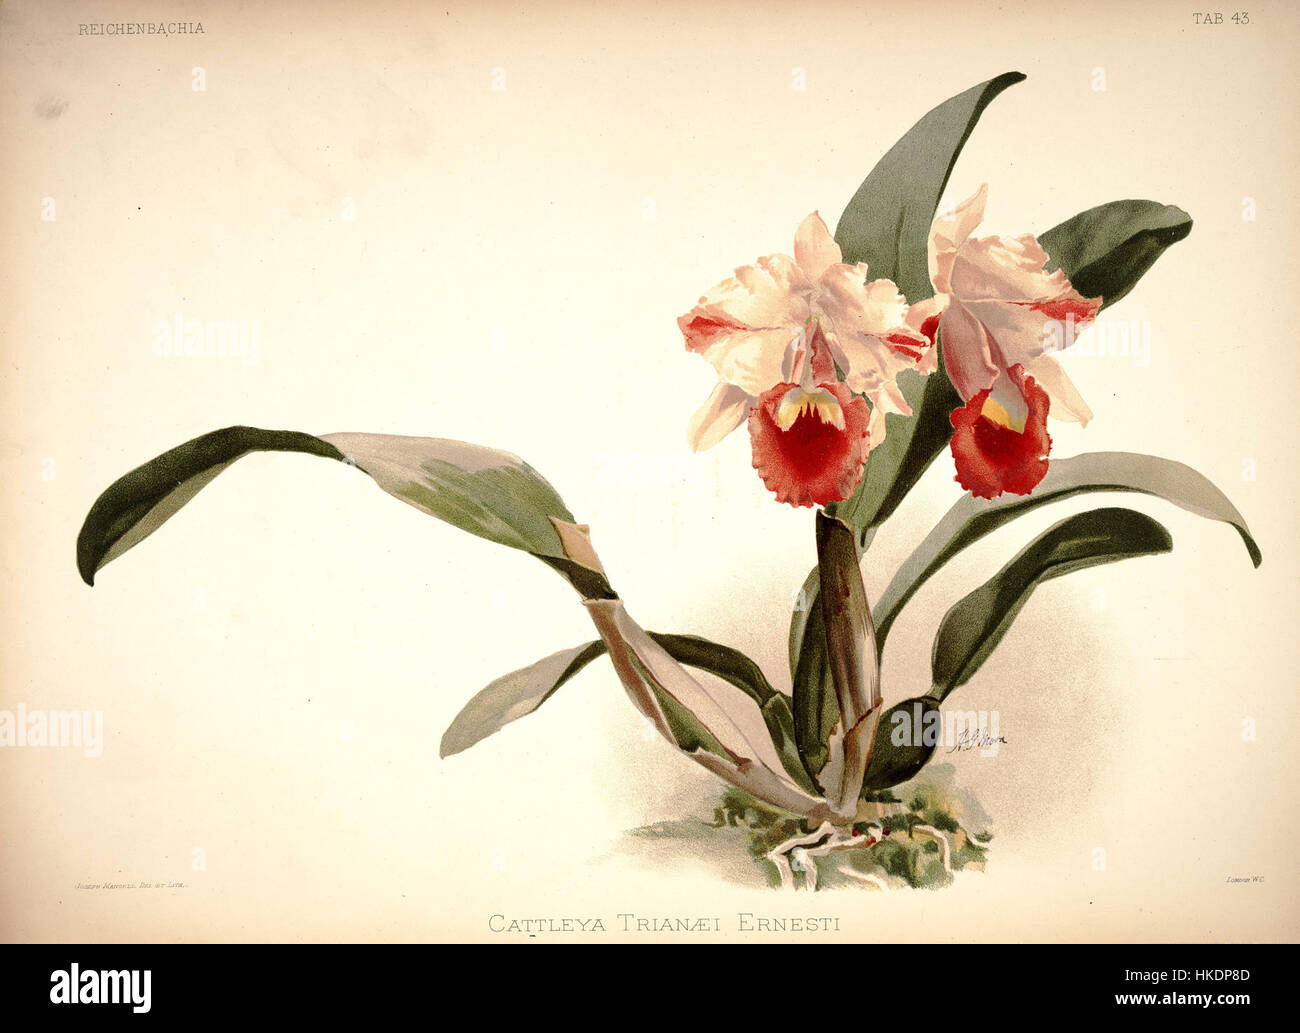 Frederick Sander   Reichenbachia I plate 43 (1888)   Cattleya trianae ernesti Stock Photo